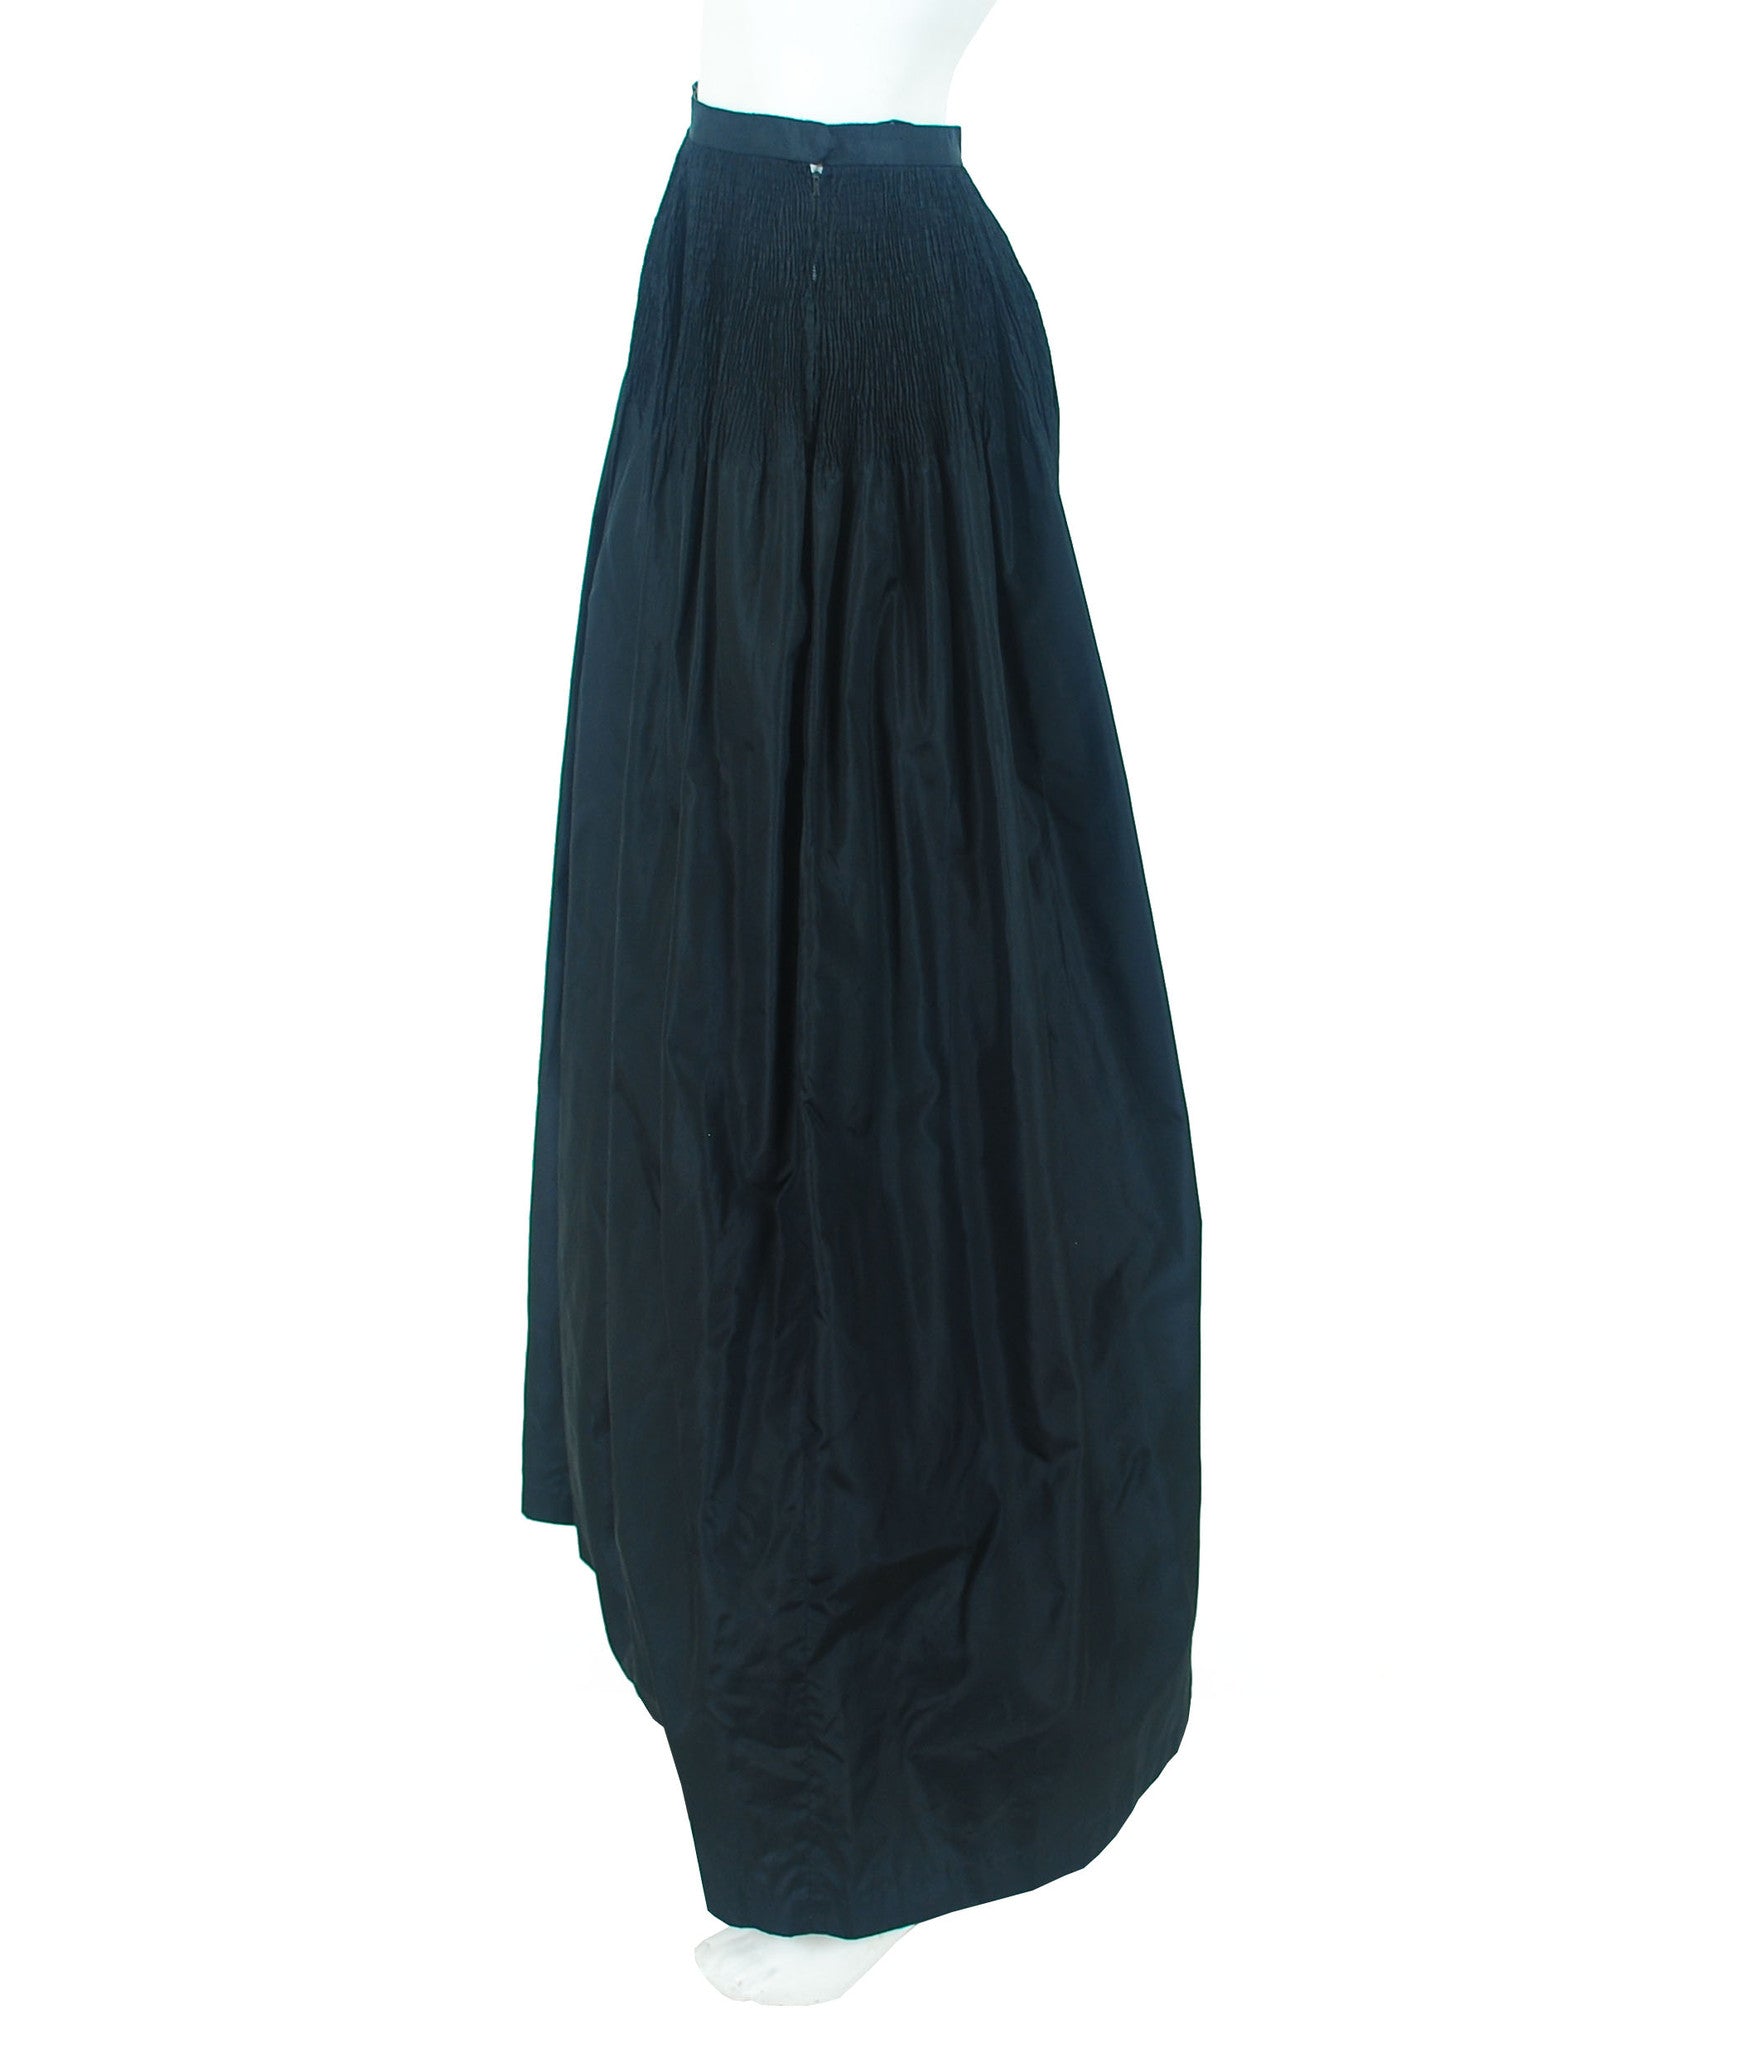 1970s Black Silk Taffeta Evening Skirt